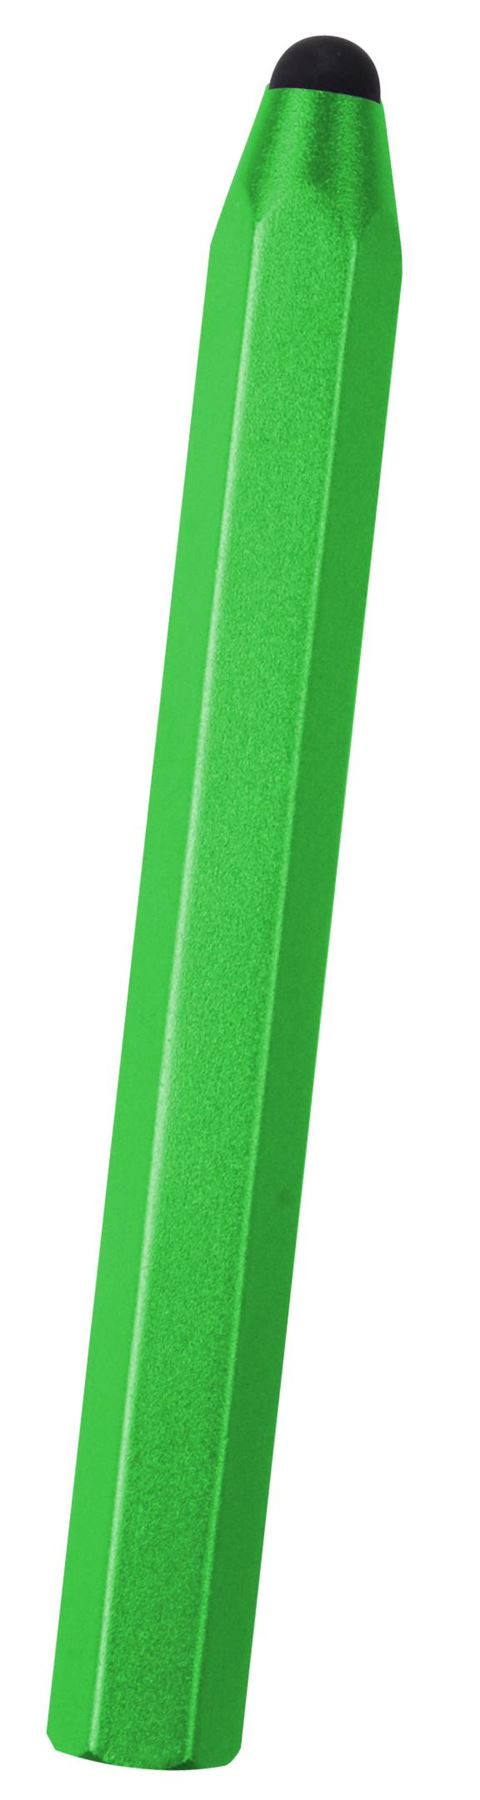 Green Aluminium Crayon Shaped Stylus for iPad iPhone Tablet Smartphone